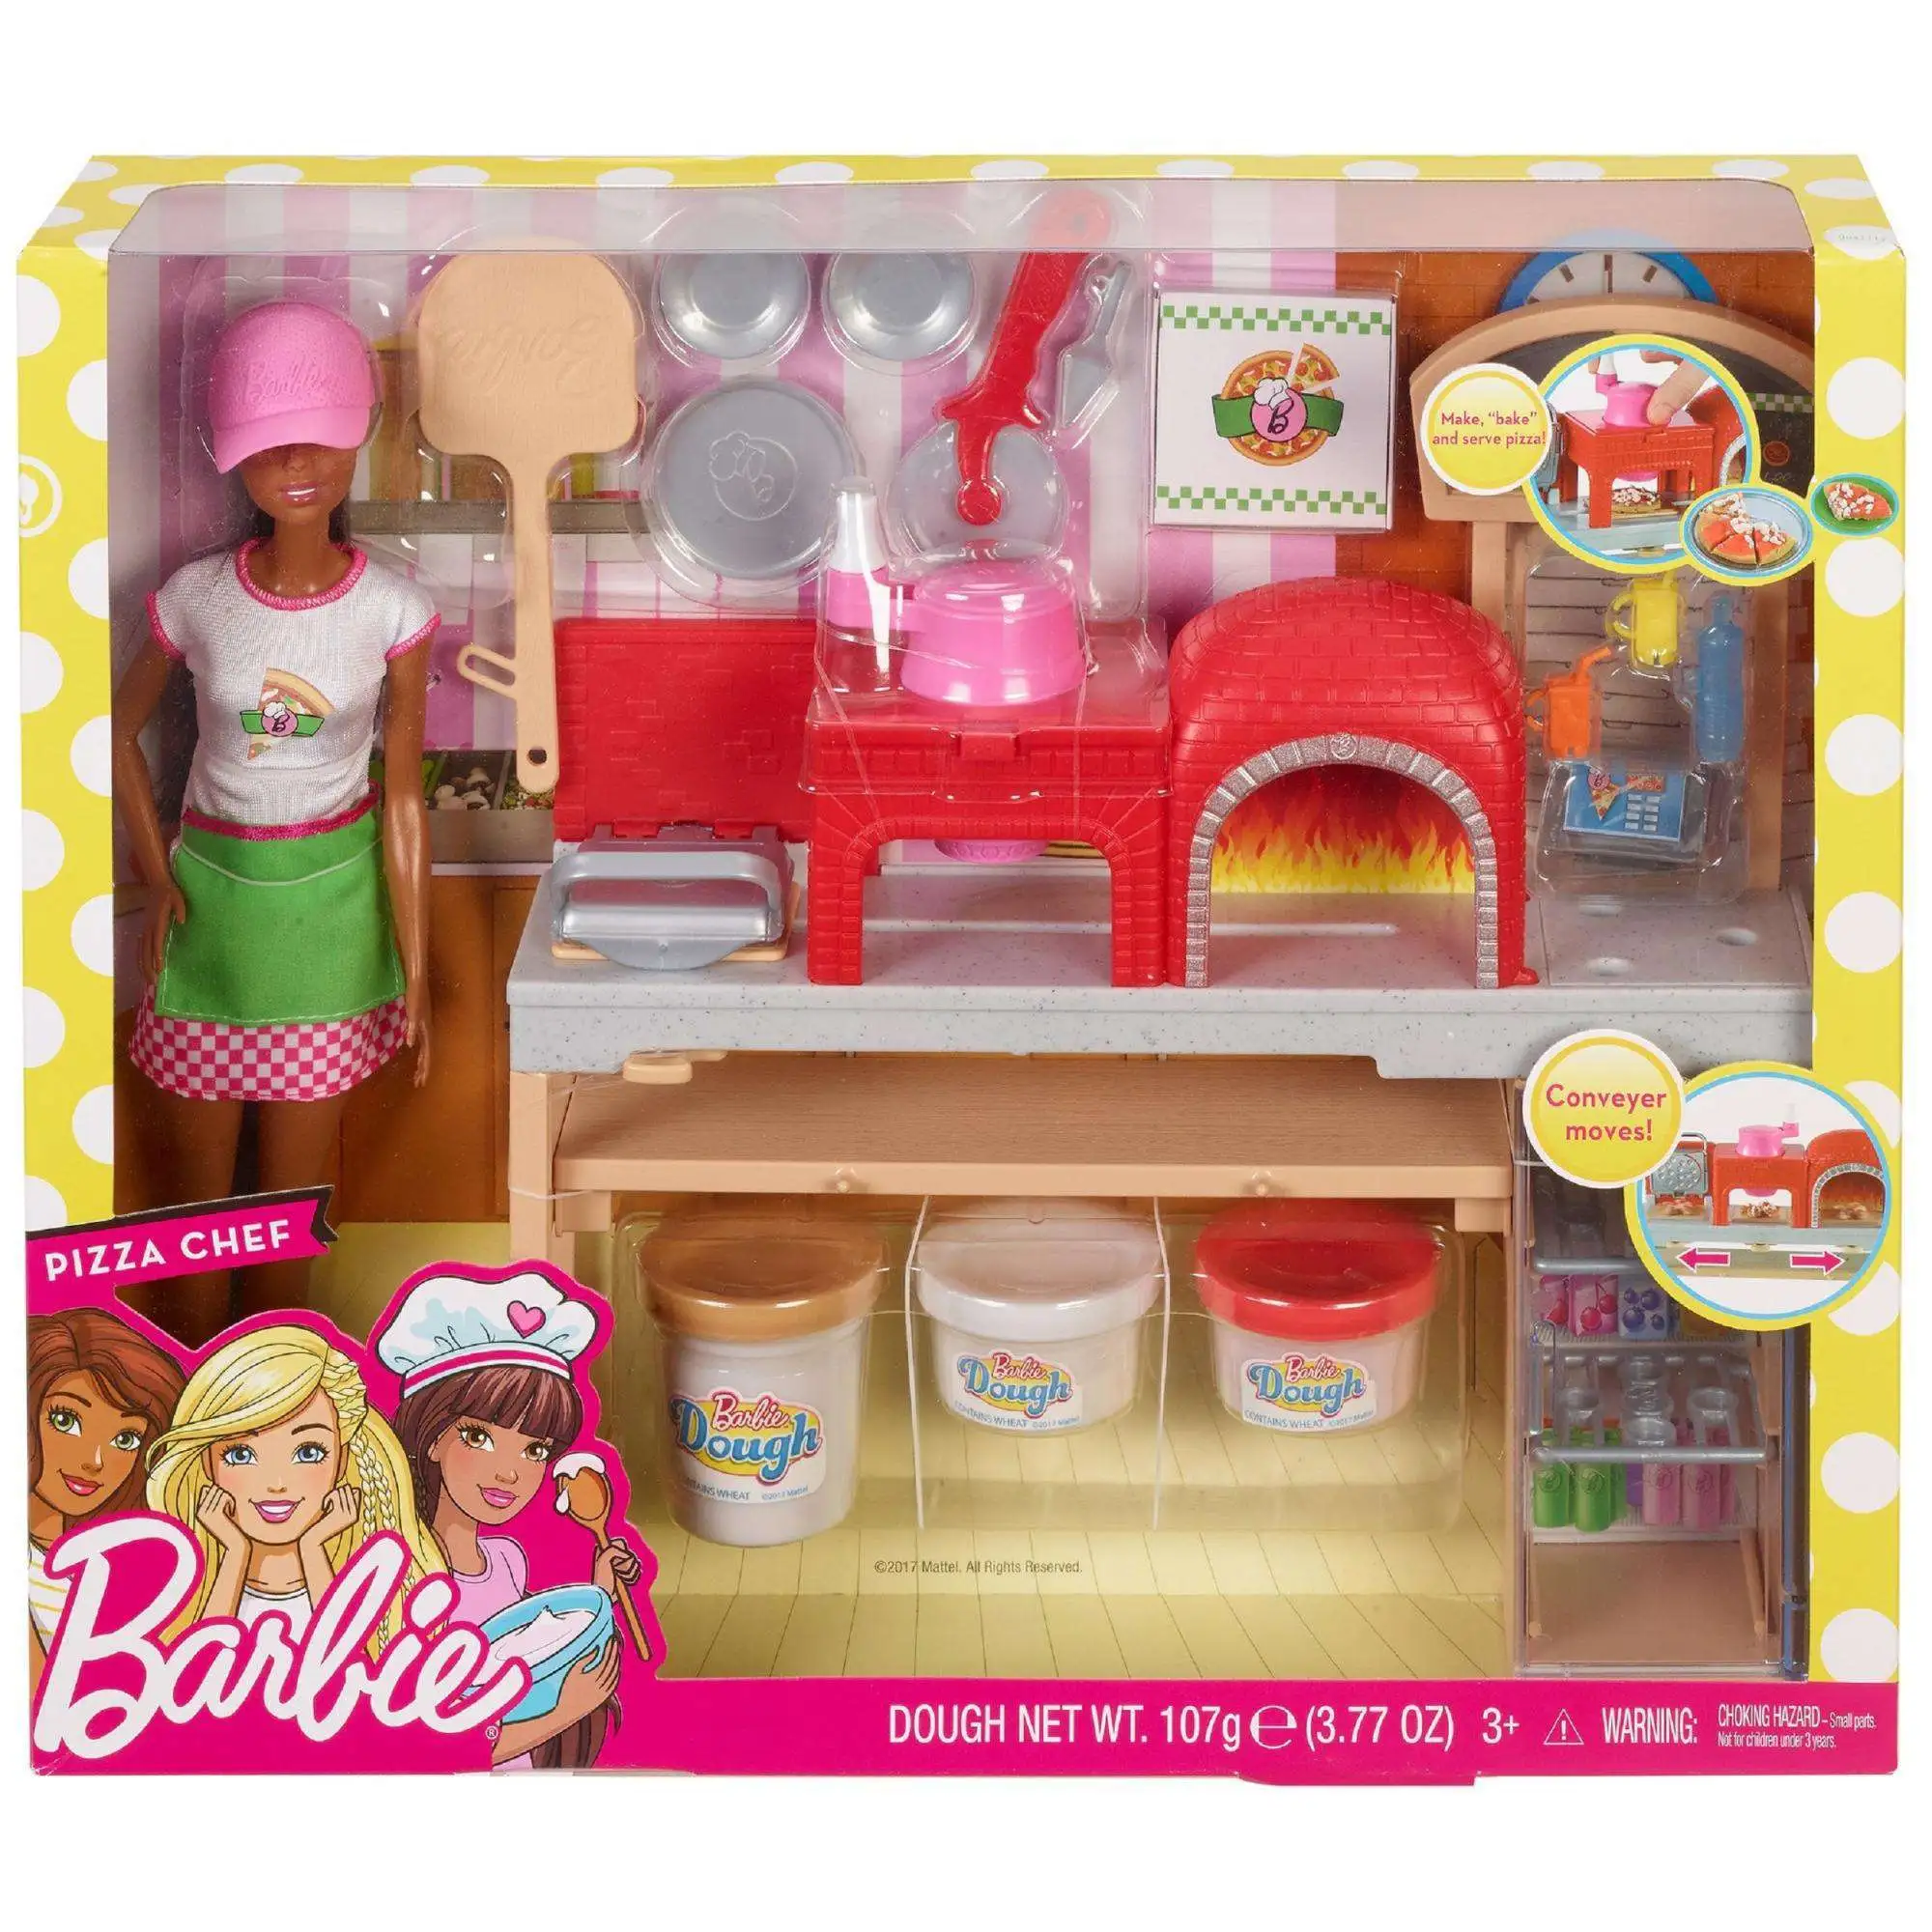 Imperativo Pastor hijo Barbie Pizza Chef Playset Brunette Version Mattel Toys - ToyWiz